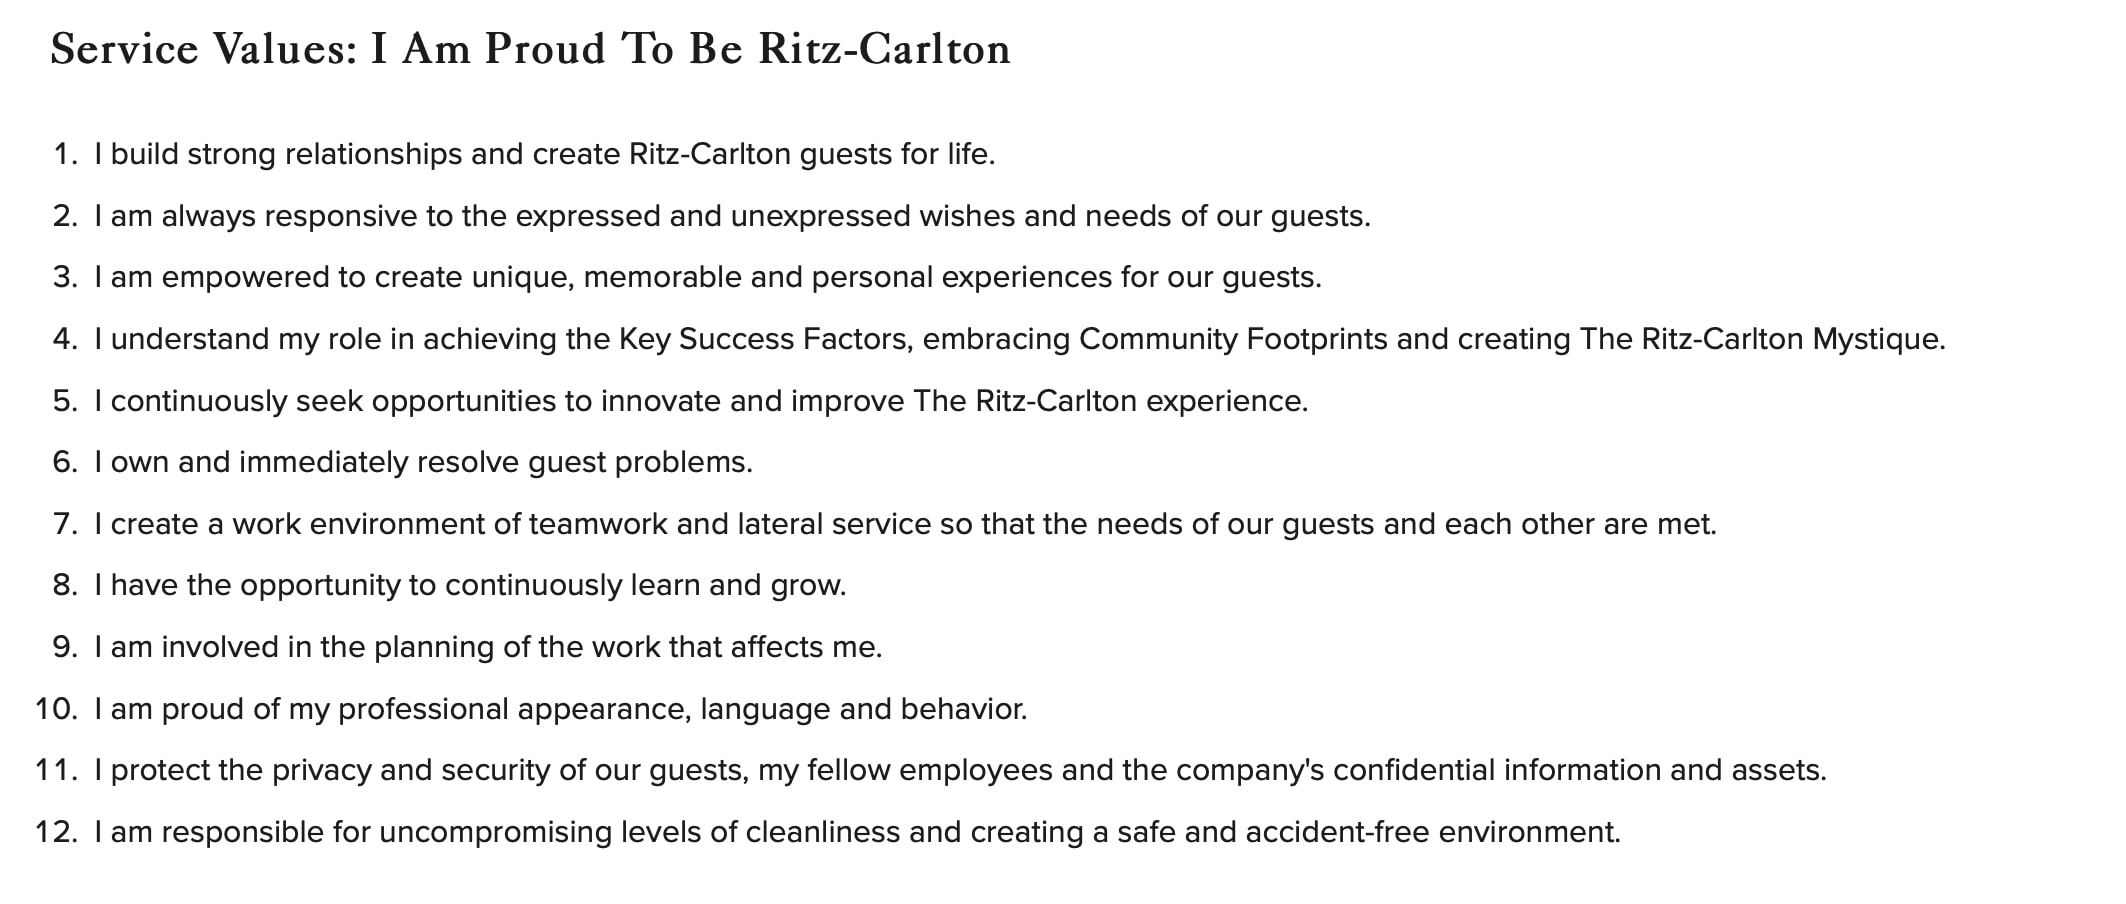 The Gold Standards of Ritz-Carlton